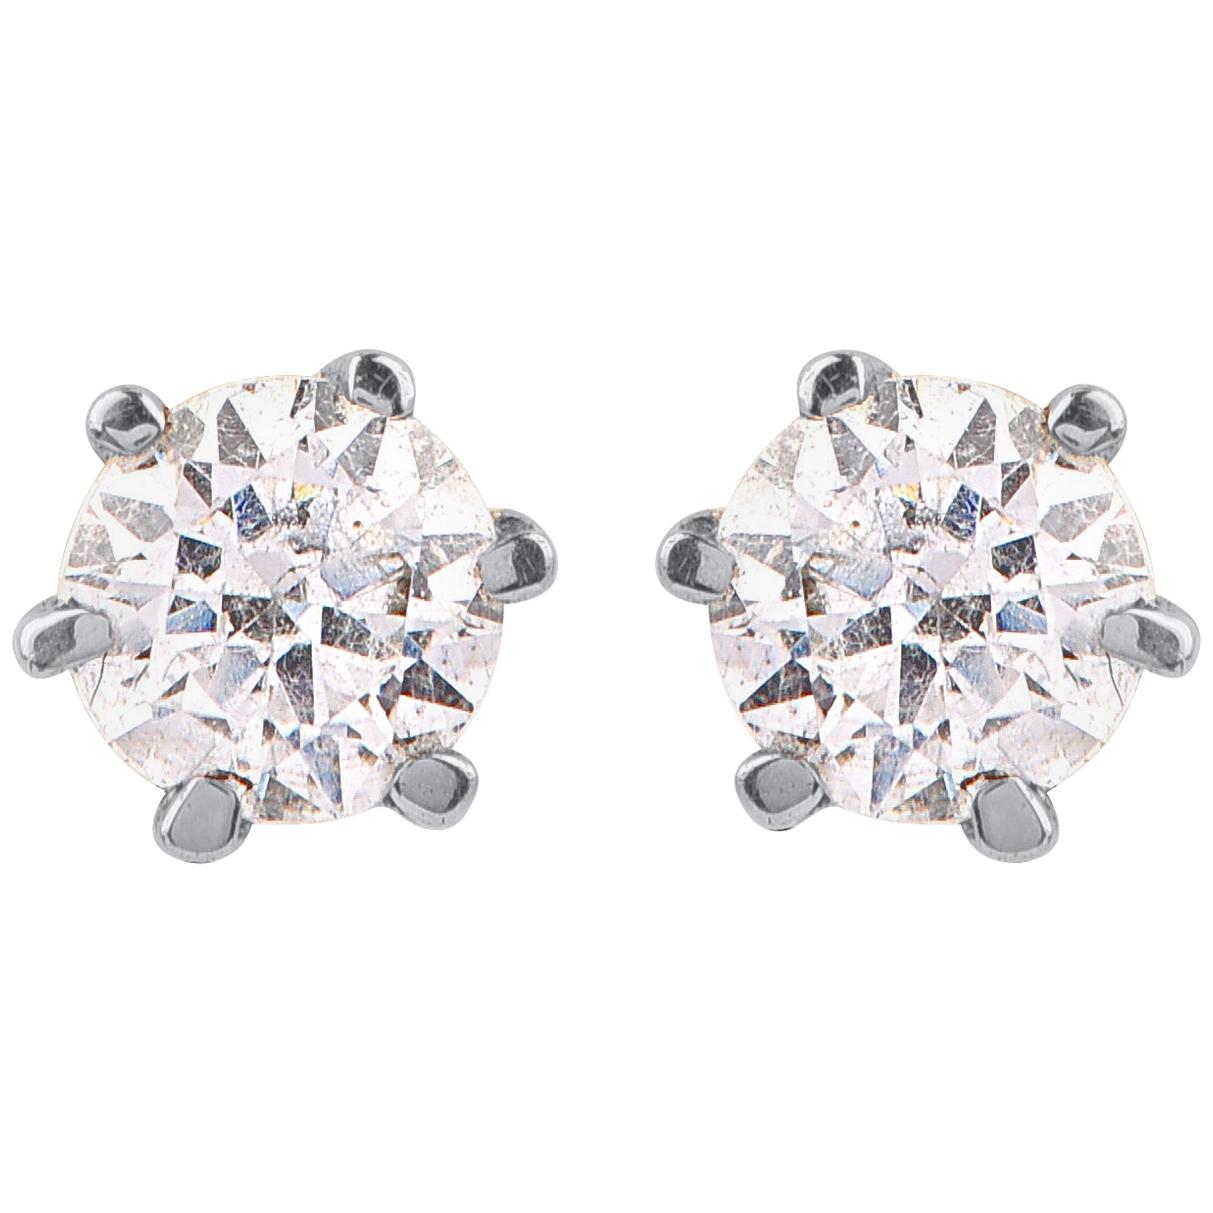 TJD 0.25 Carat Natural Diamond 18 Karat White Gold Six Prong Solitaire Earrings